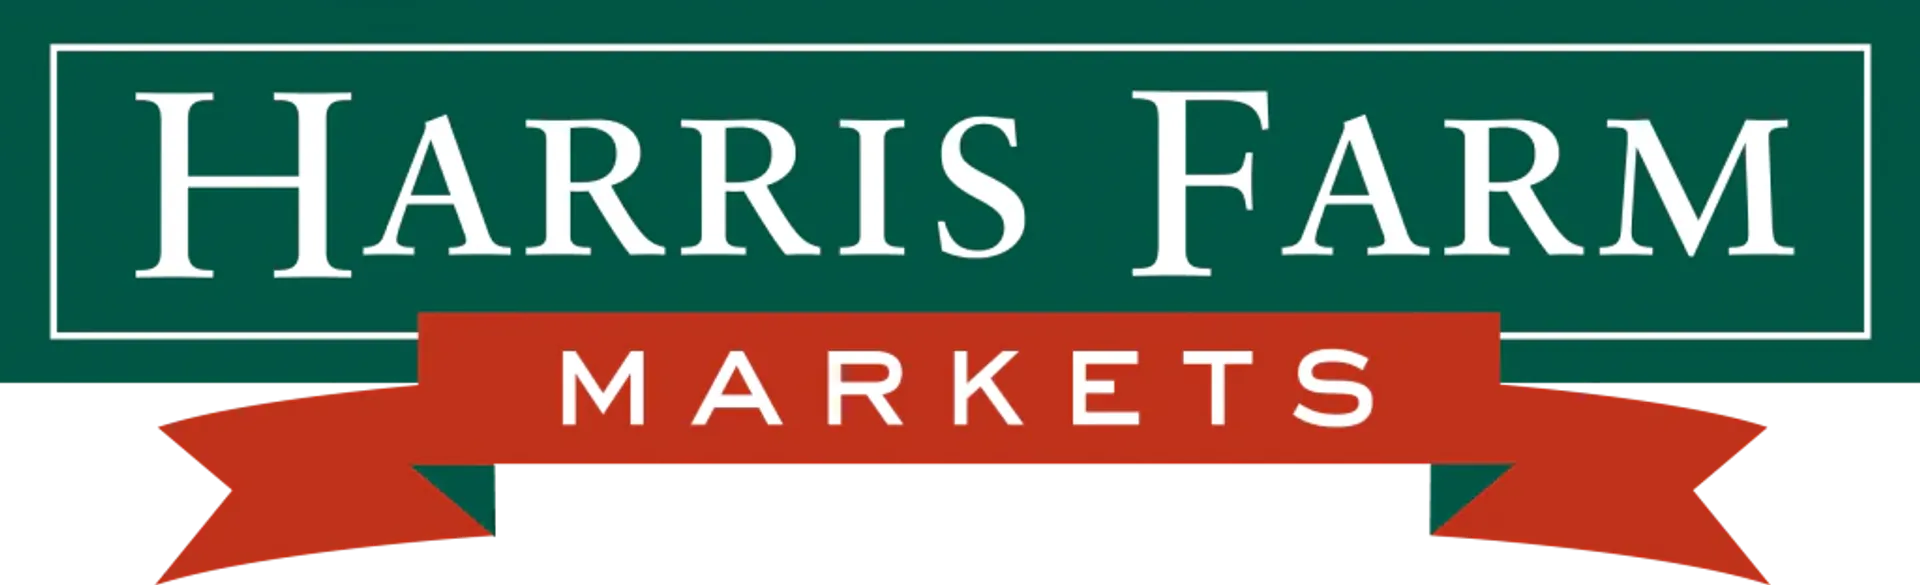 HARRIS FARM MARKETS logo of current flyer